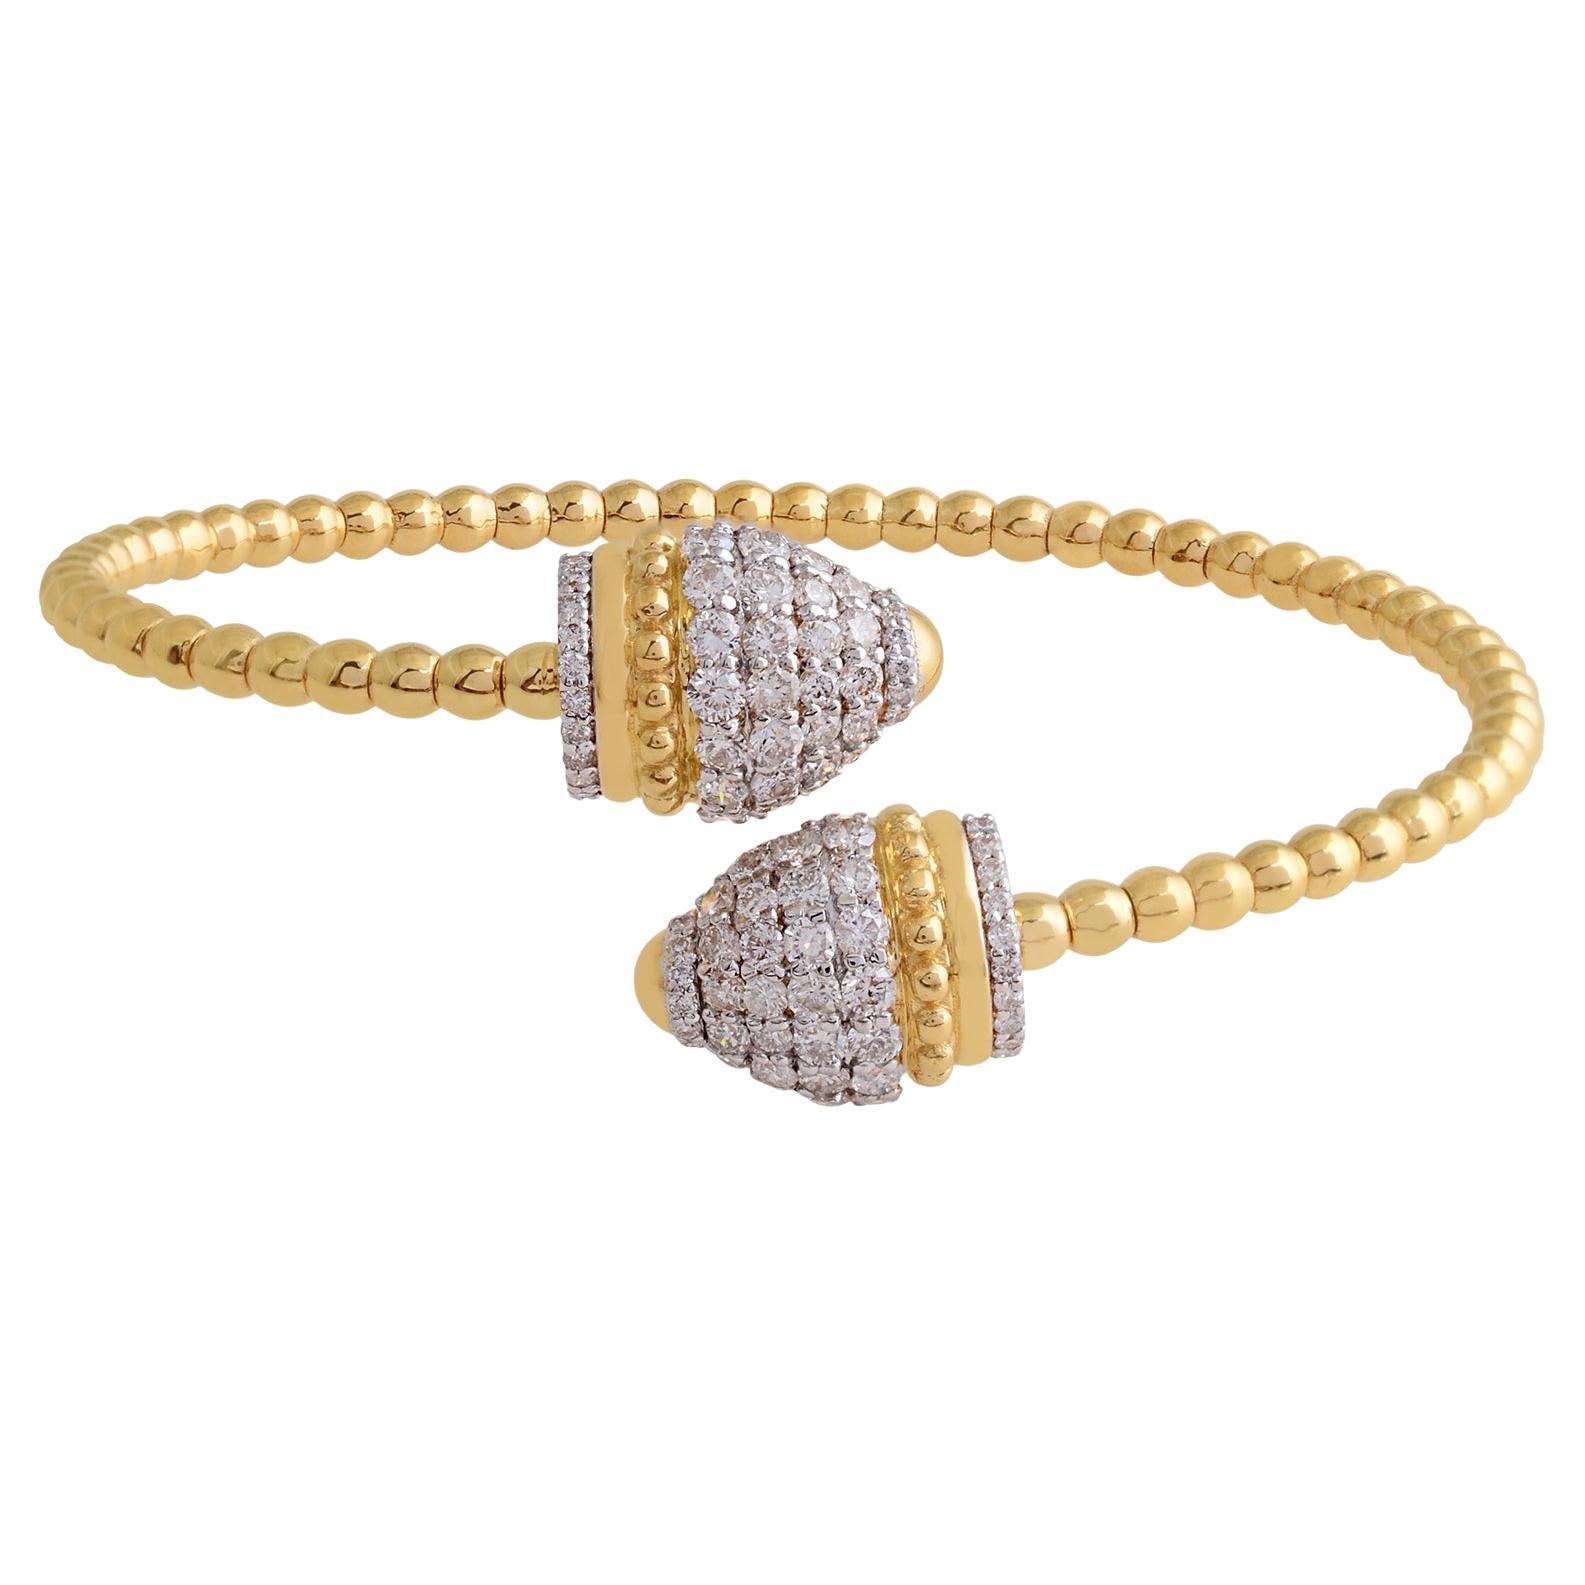 1.90 Carat Pave Diamond Wrap Bangle Bracelet Solid 18k Yellow Gold Fine Jewelry For Sale